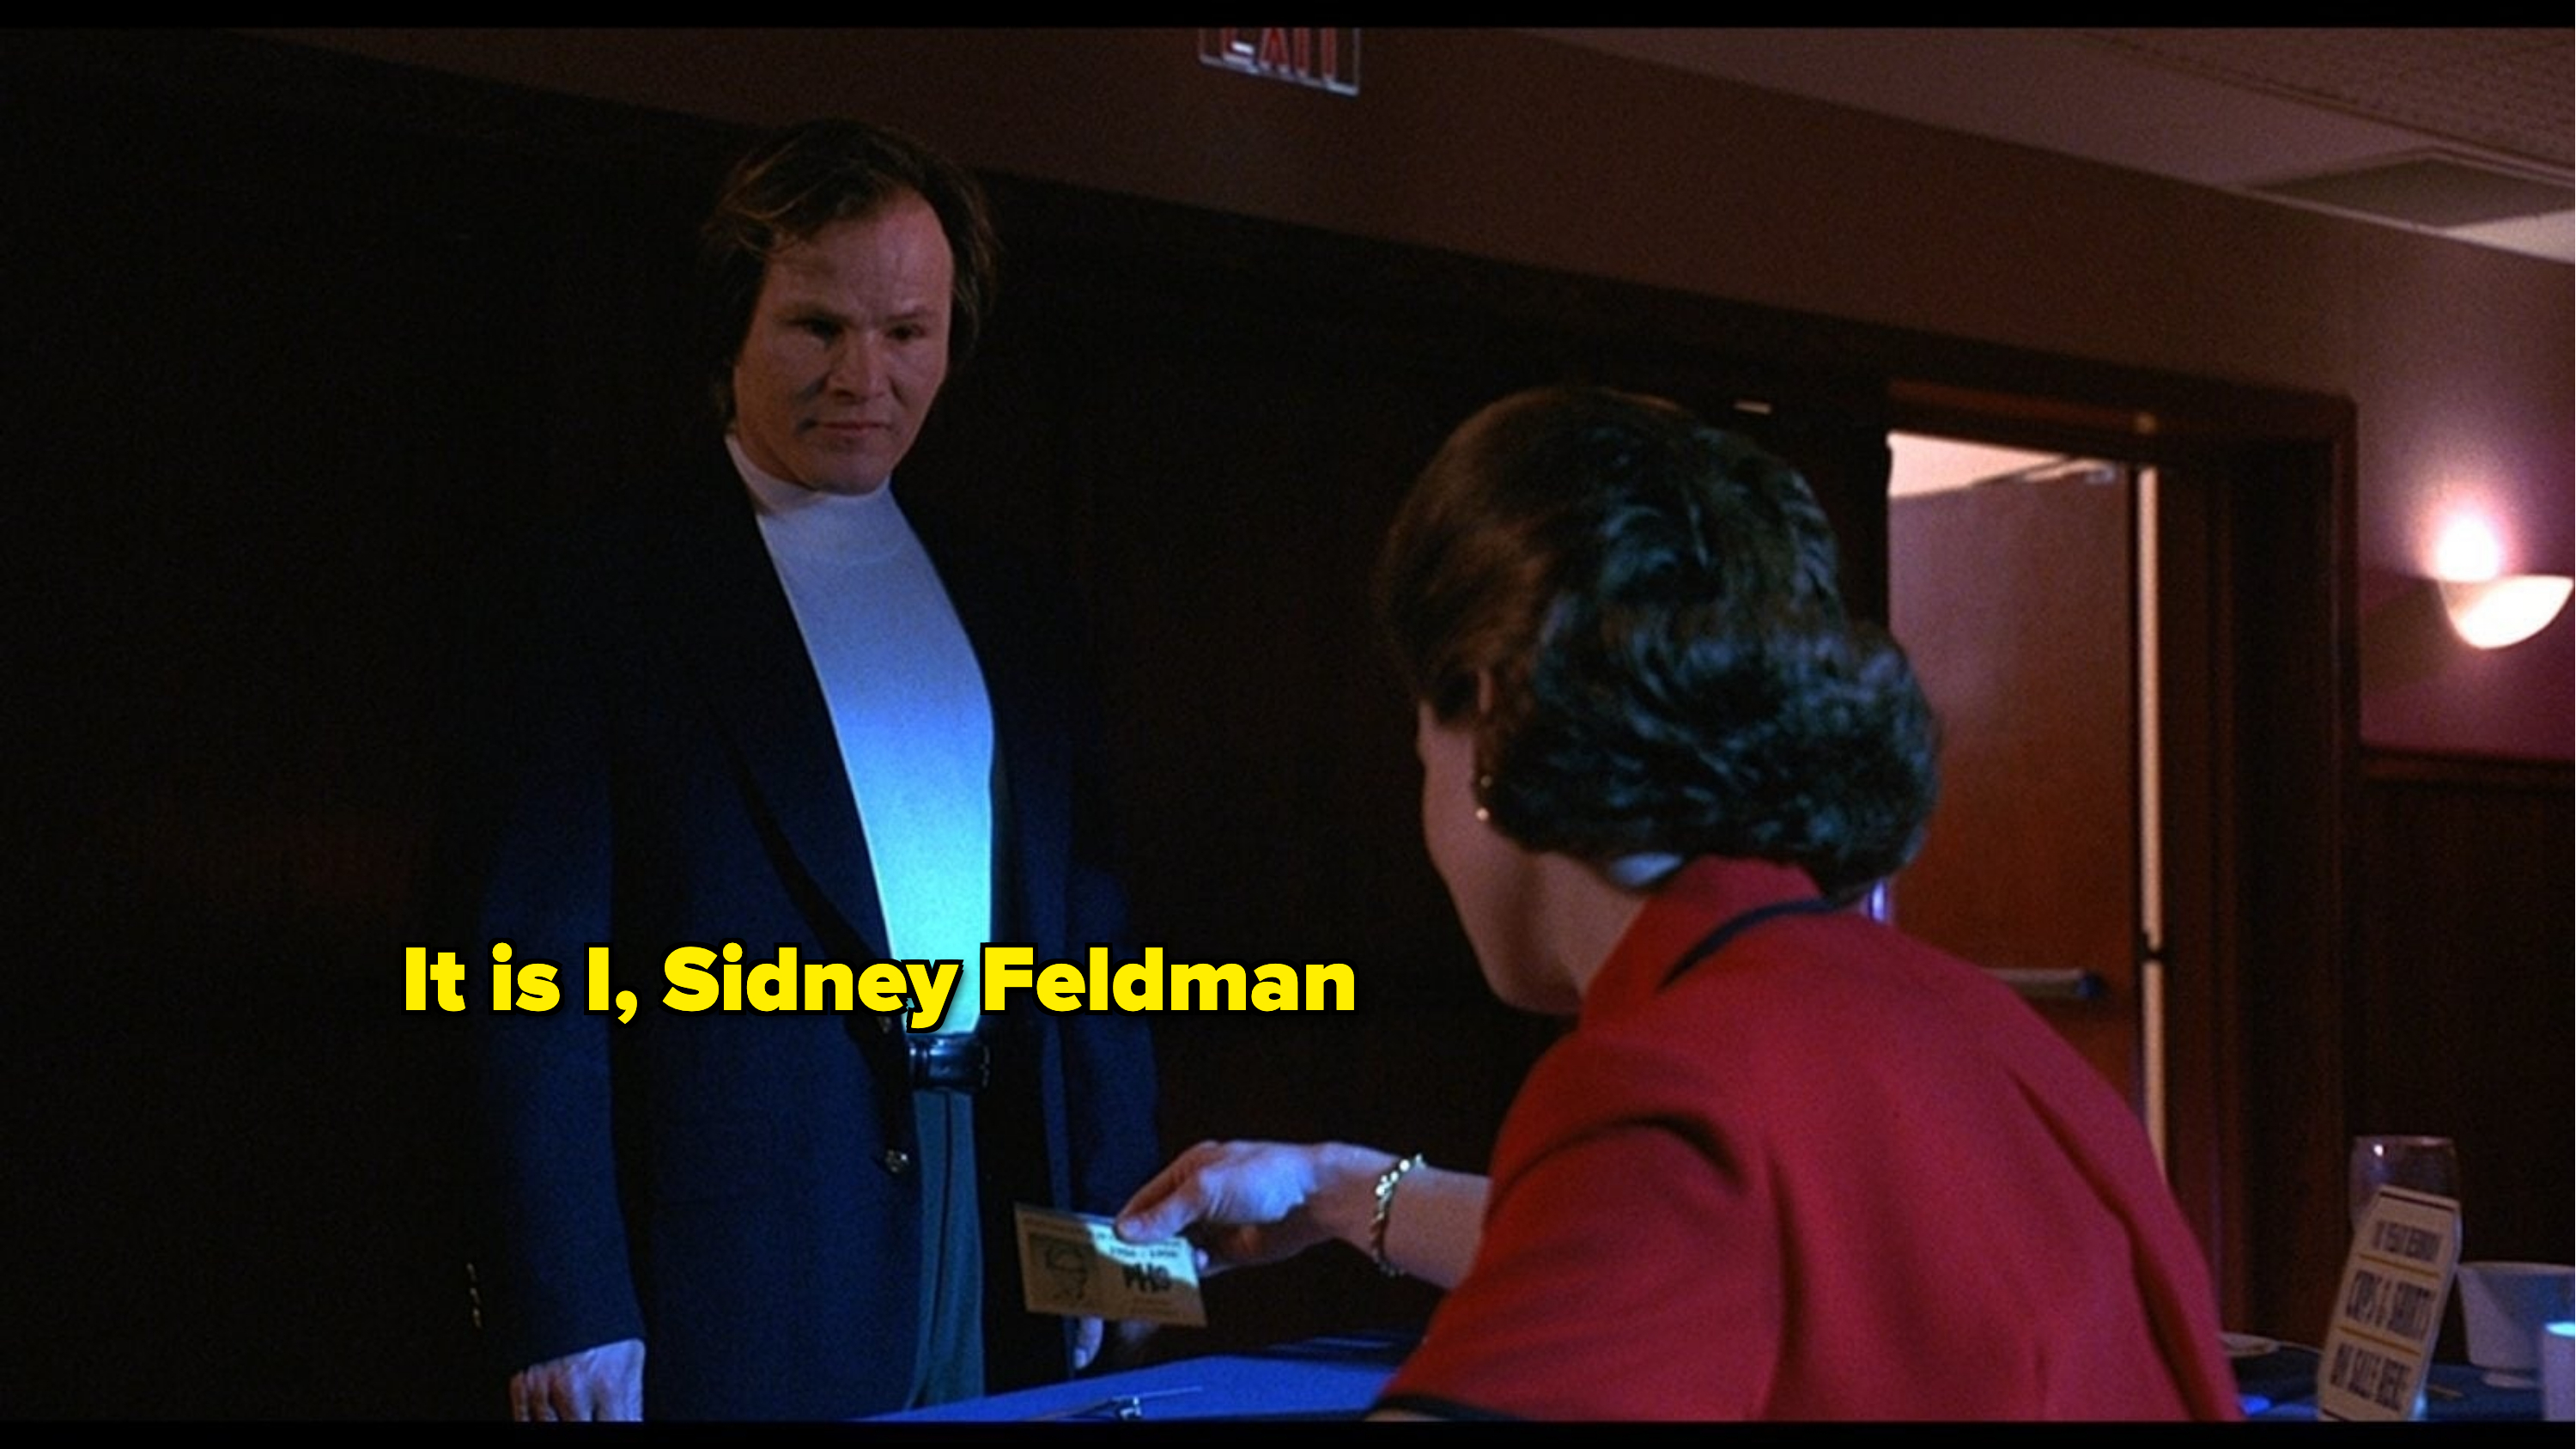 &quot;It is I, Sidney Feldman&quot;